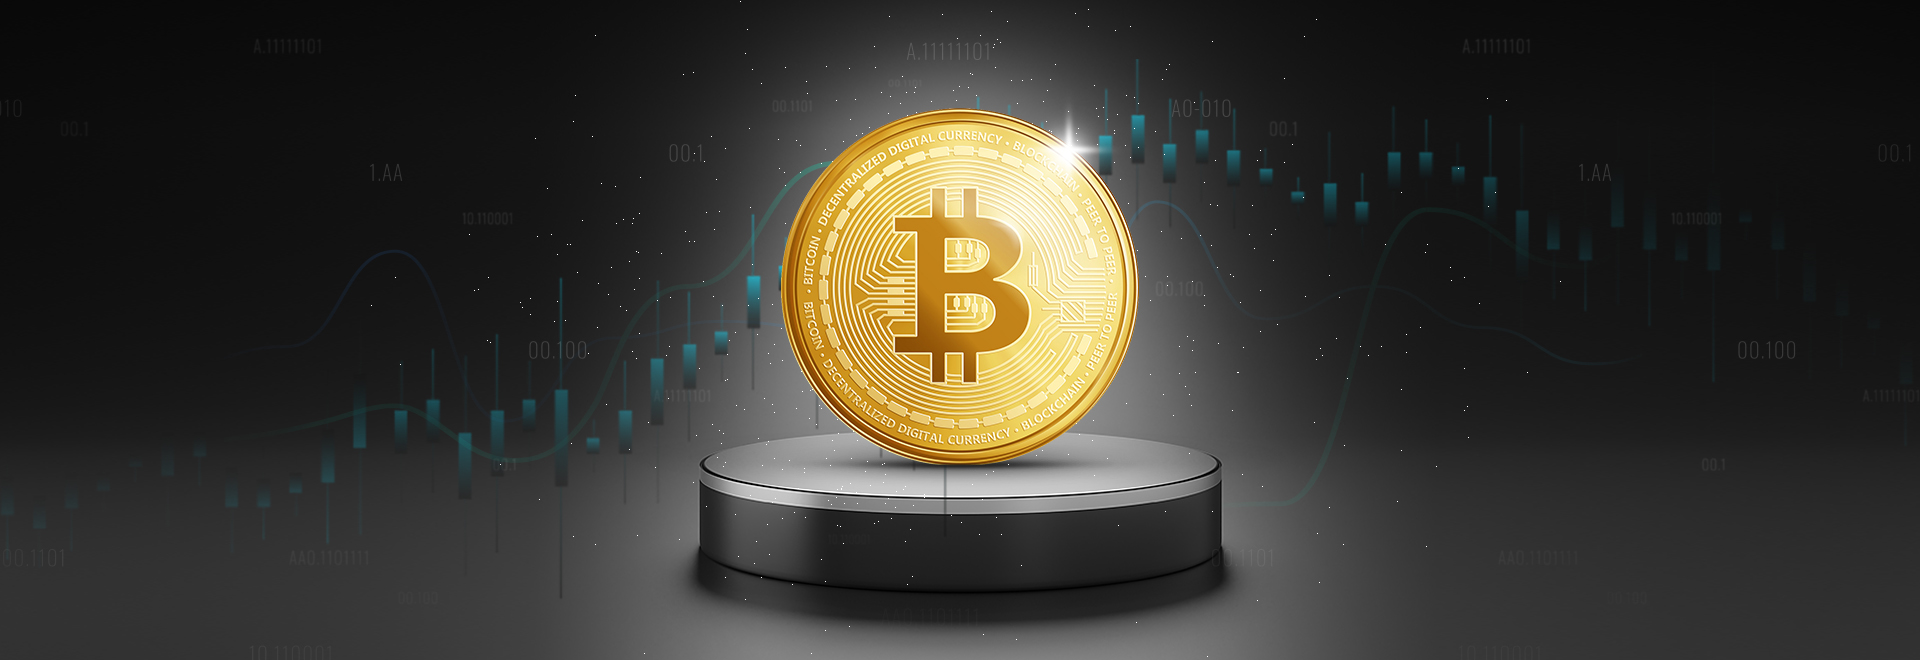 Traders Concerns Over Bitcoin's Unpredictability